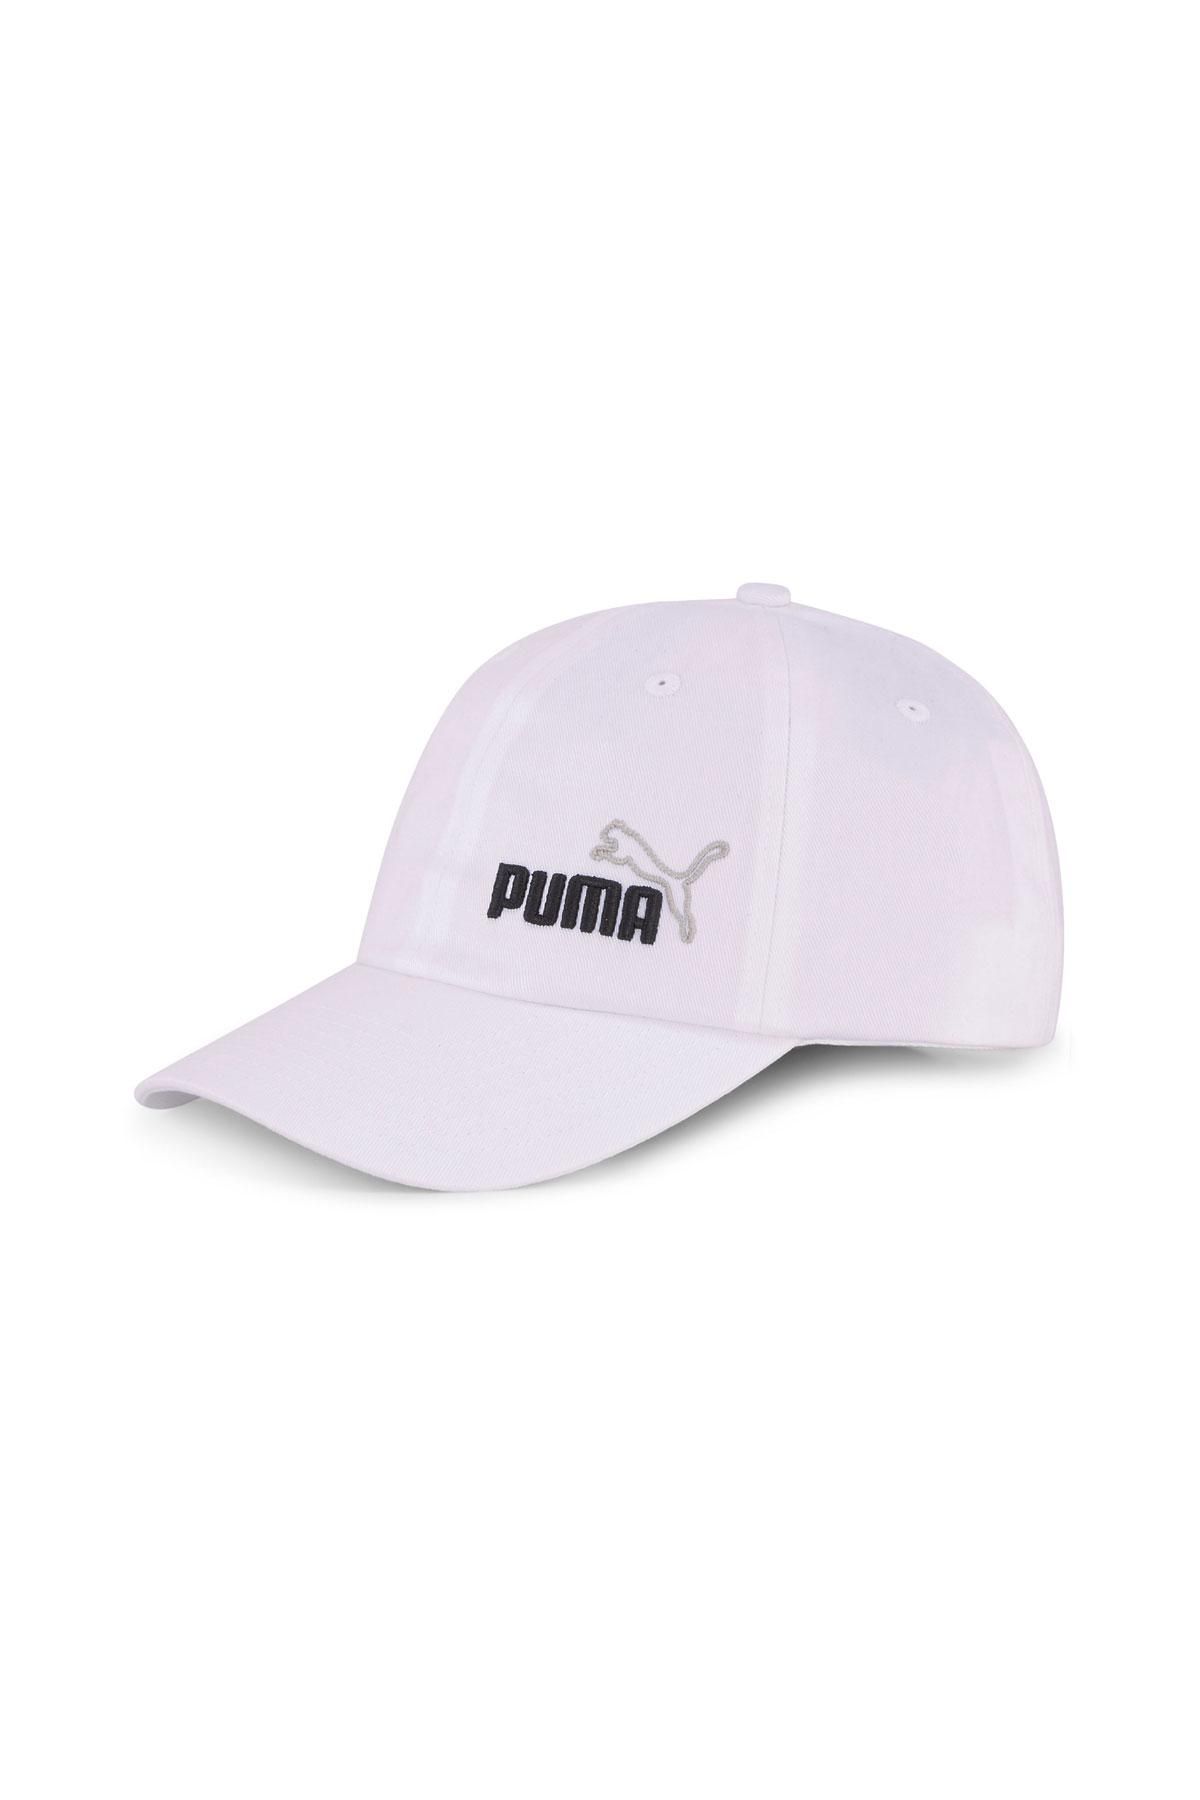 PUMA Ess Cap Ii Puma White-No 1 White Men Caps